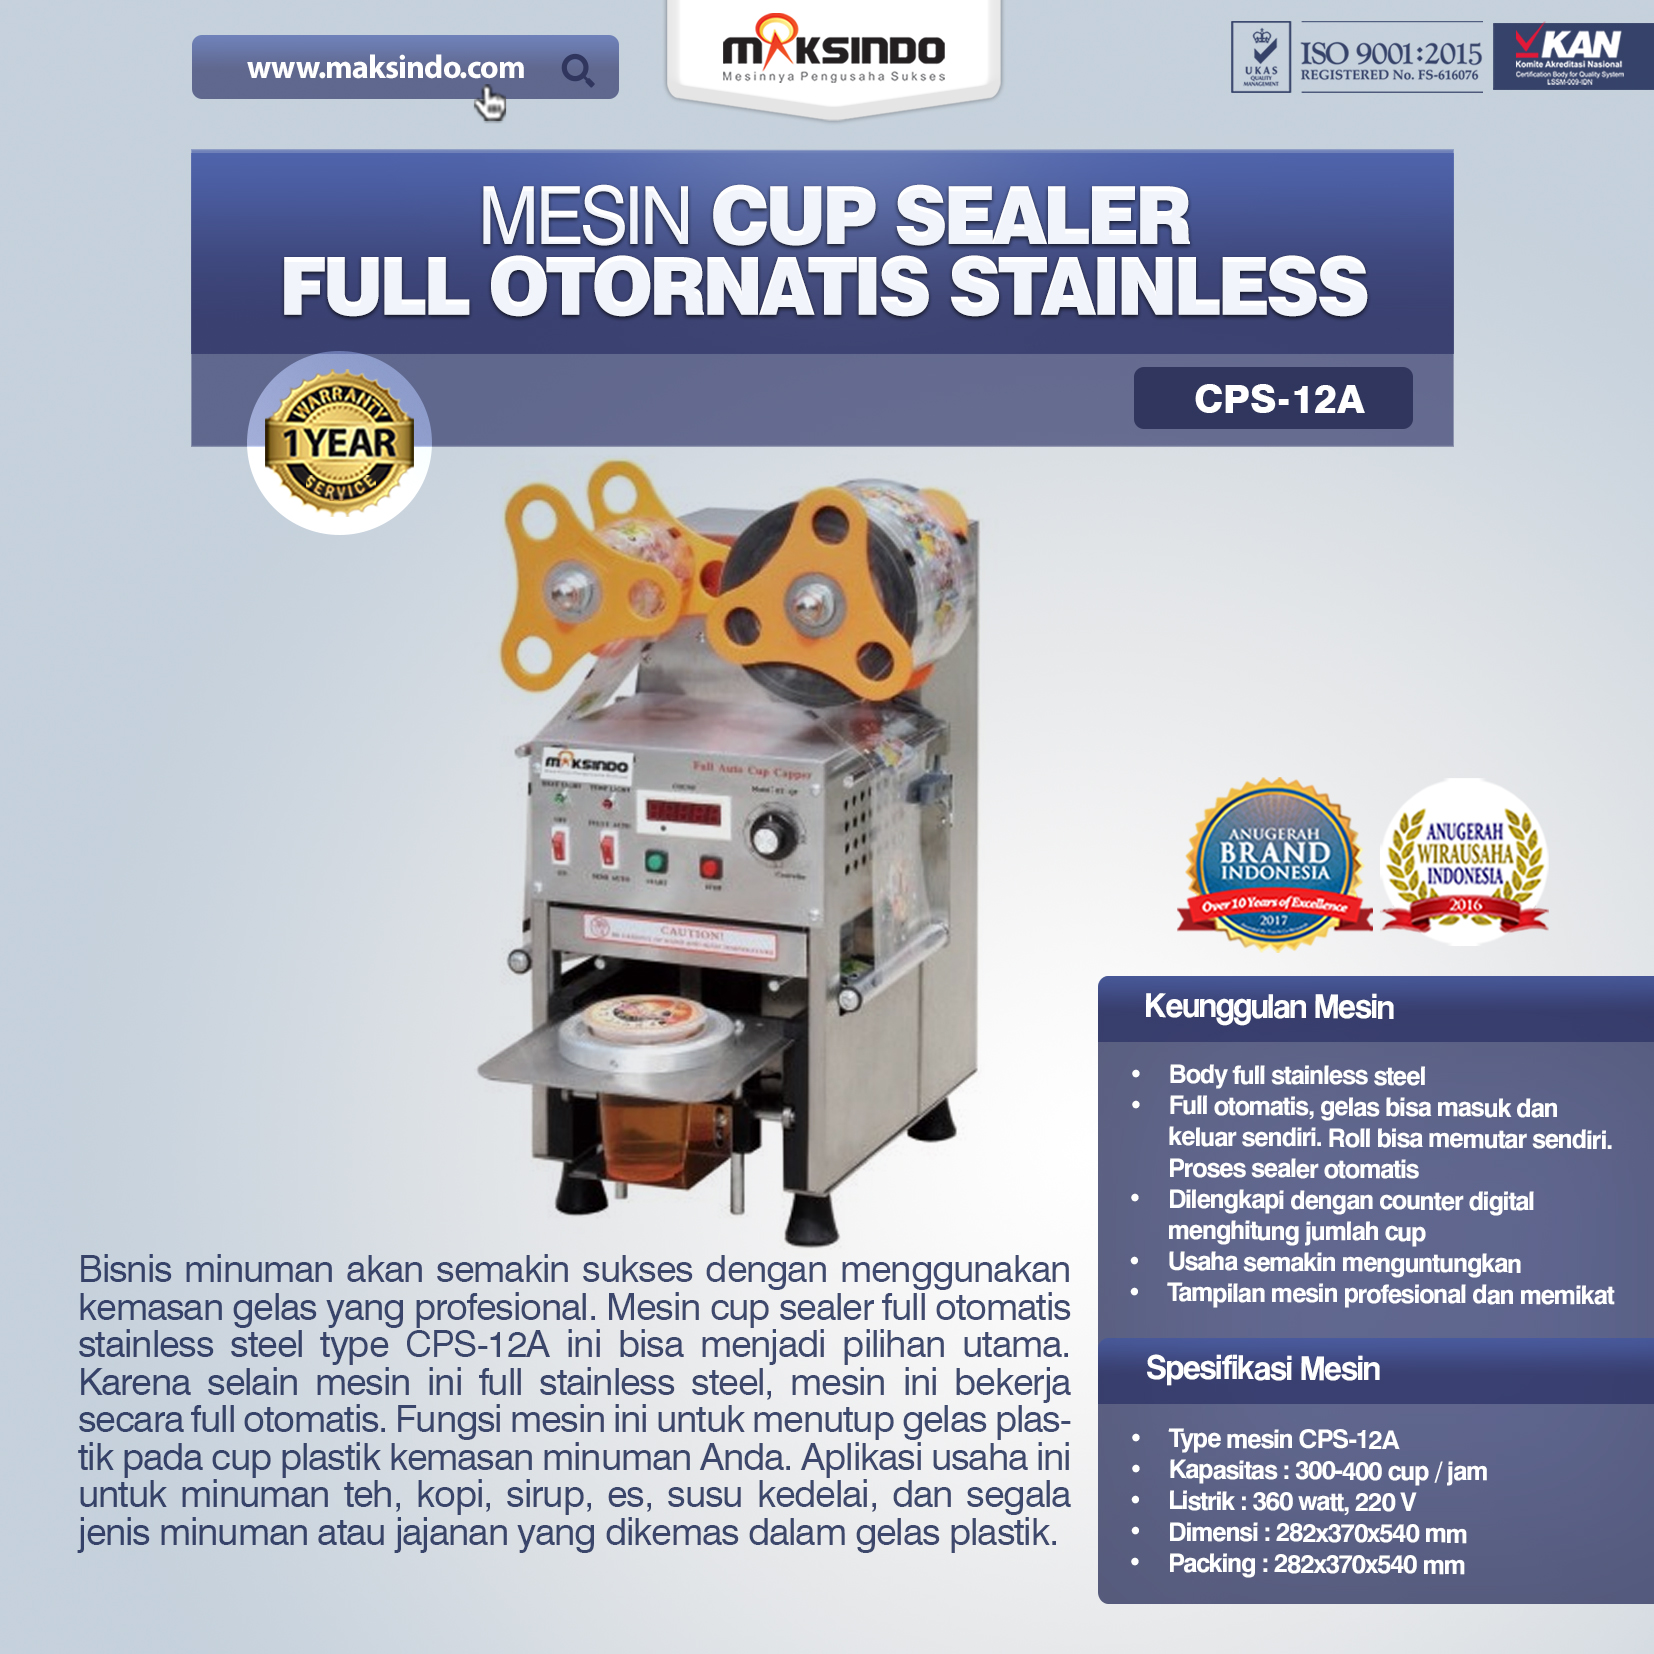 Jual Mesin Cup Sealer Full Otomatis Stainless (CPS-12A) di Jakarta